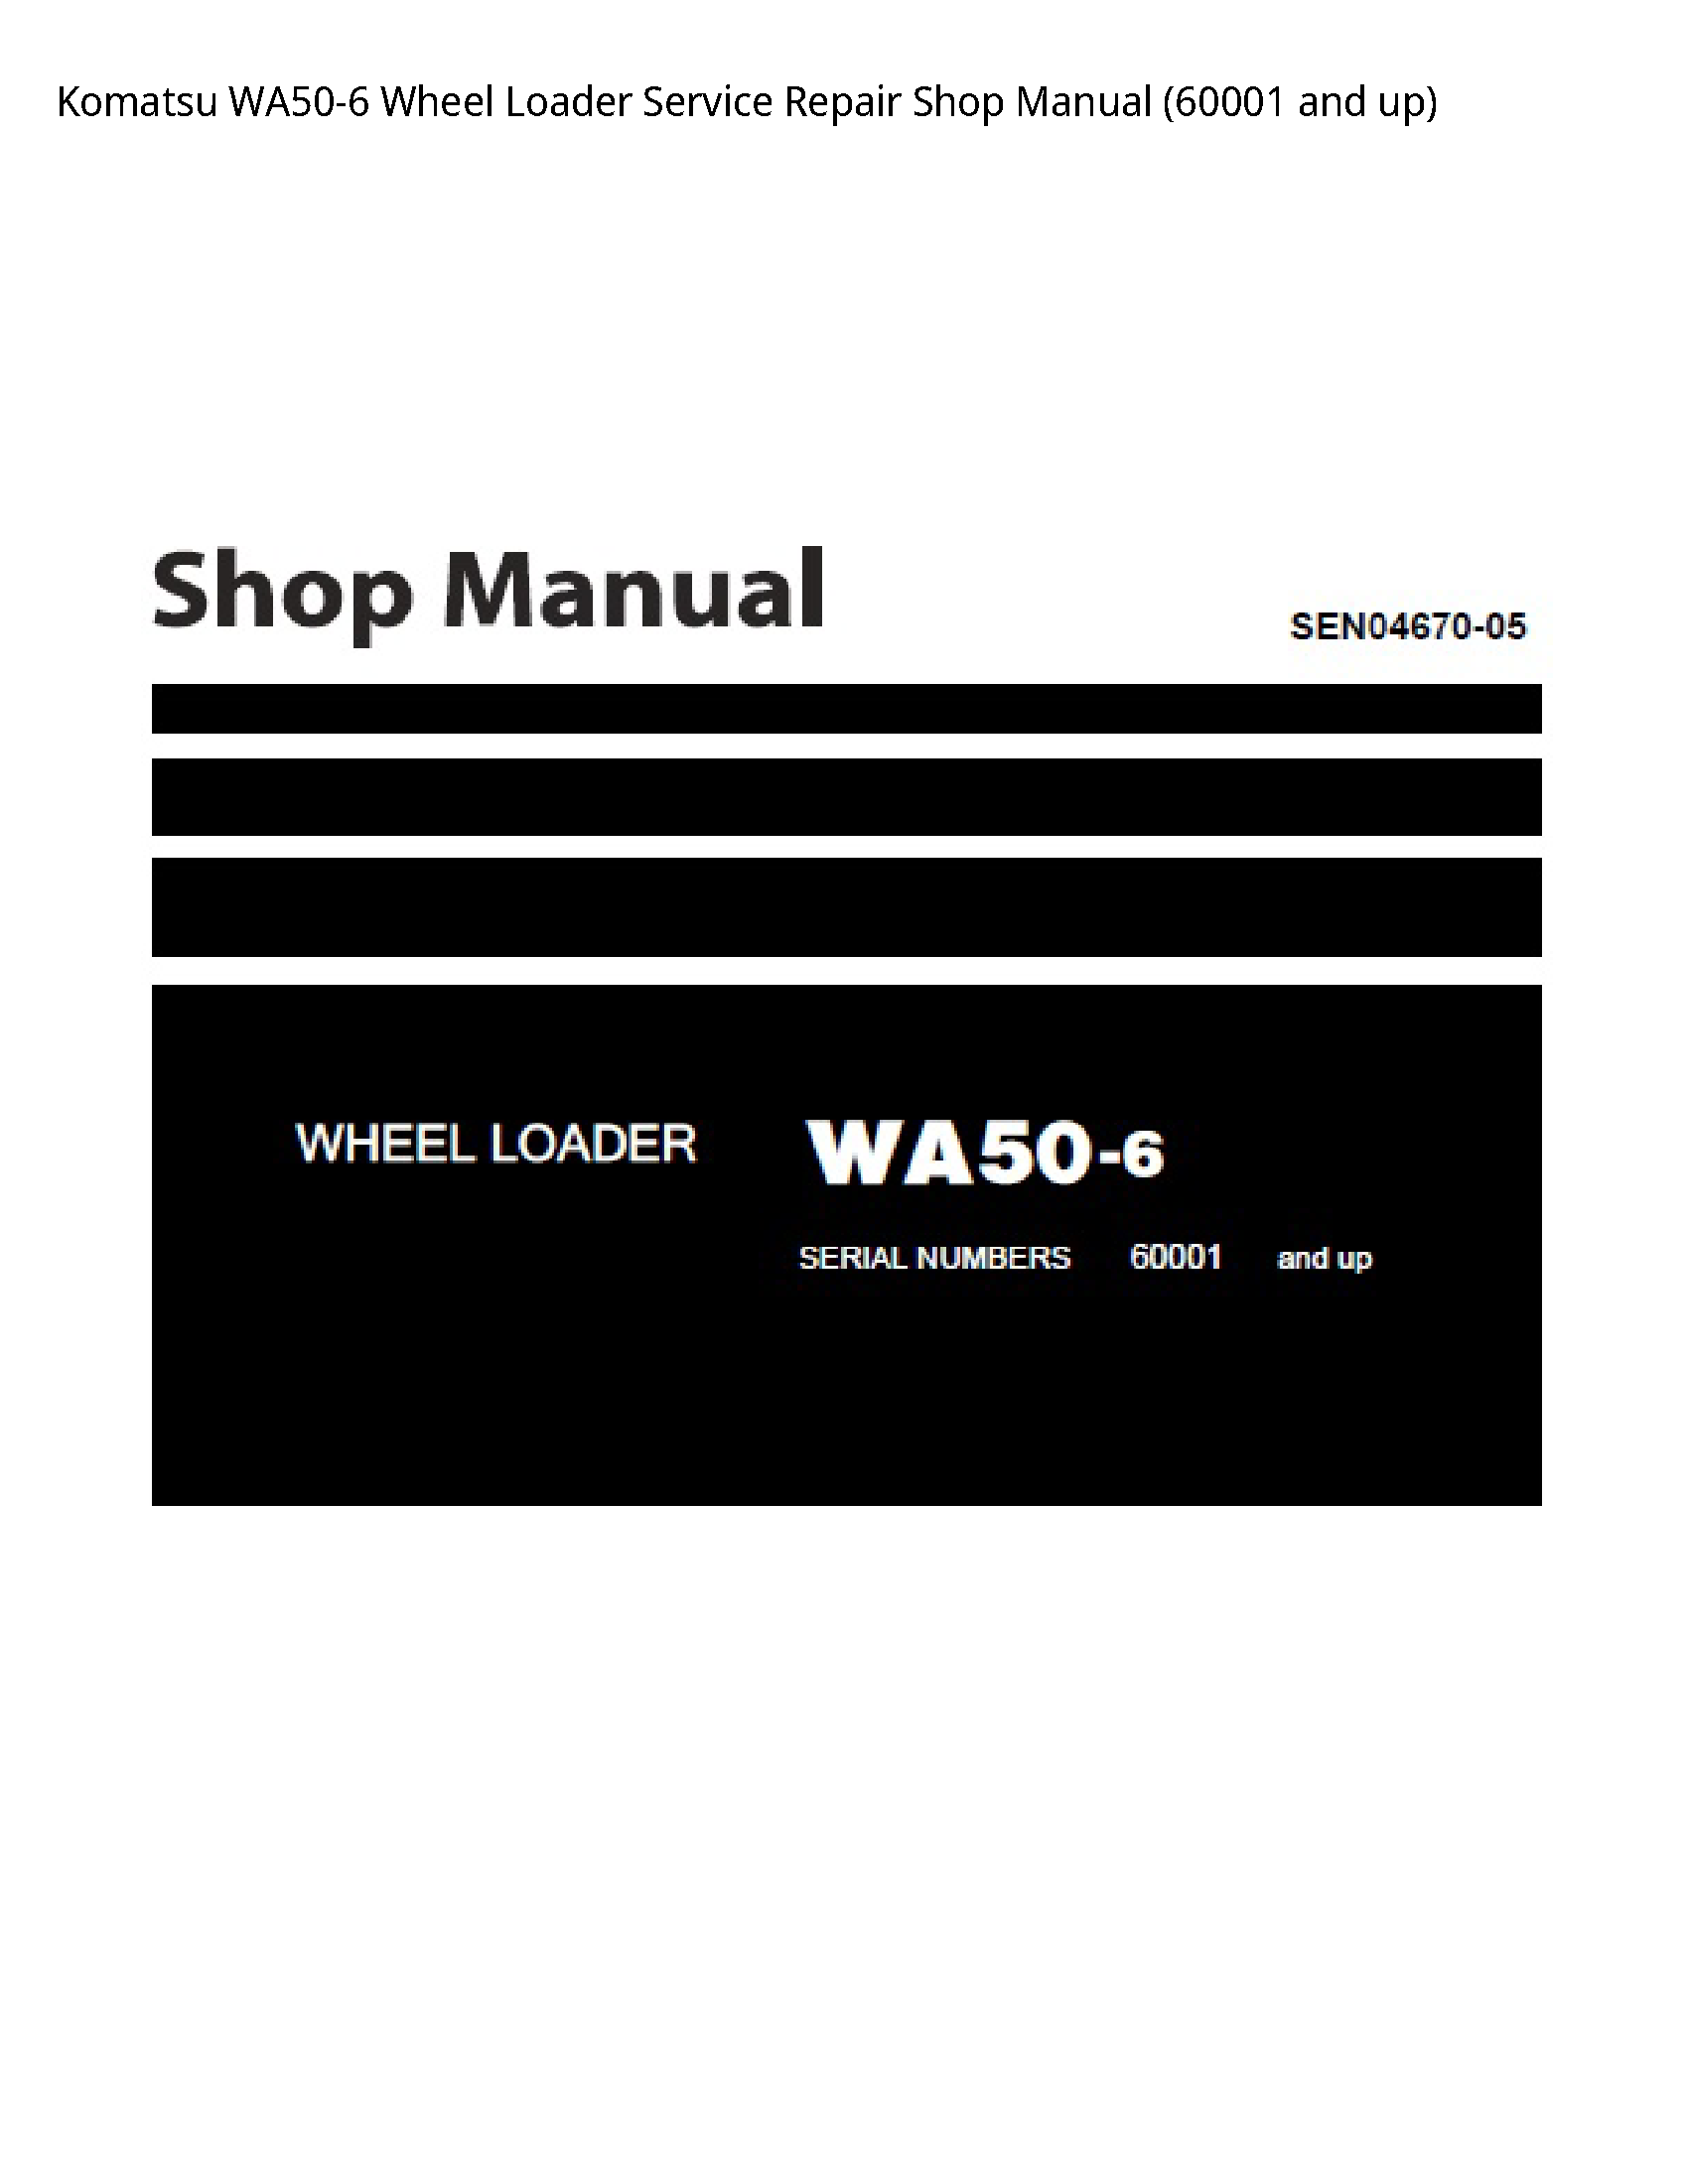 KOMATSU WA50-6 Wheel Loader manual